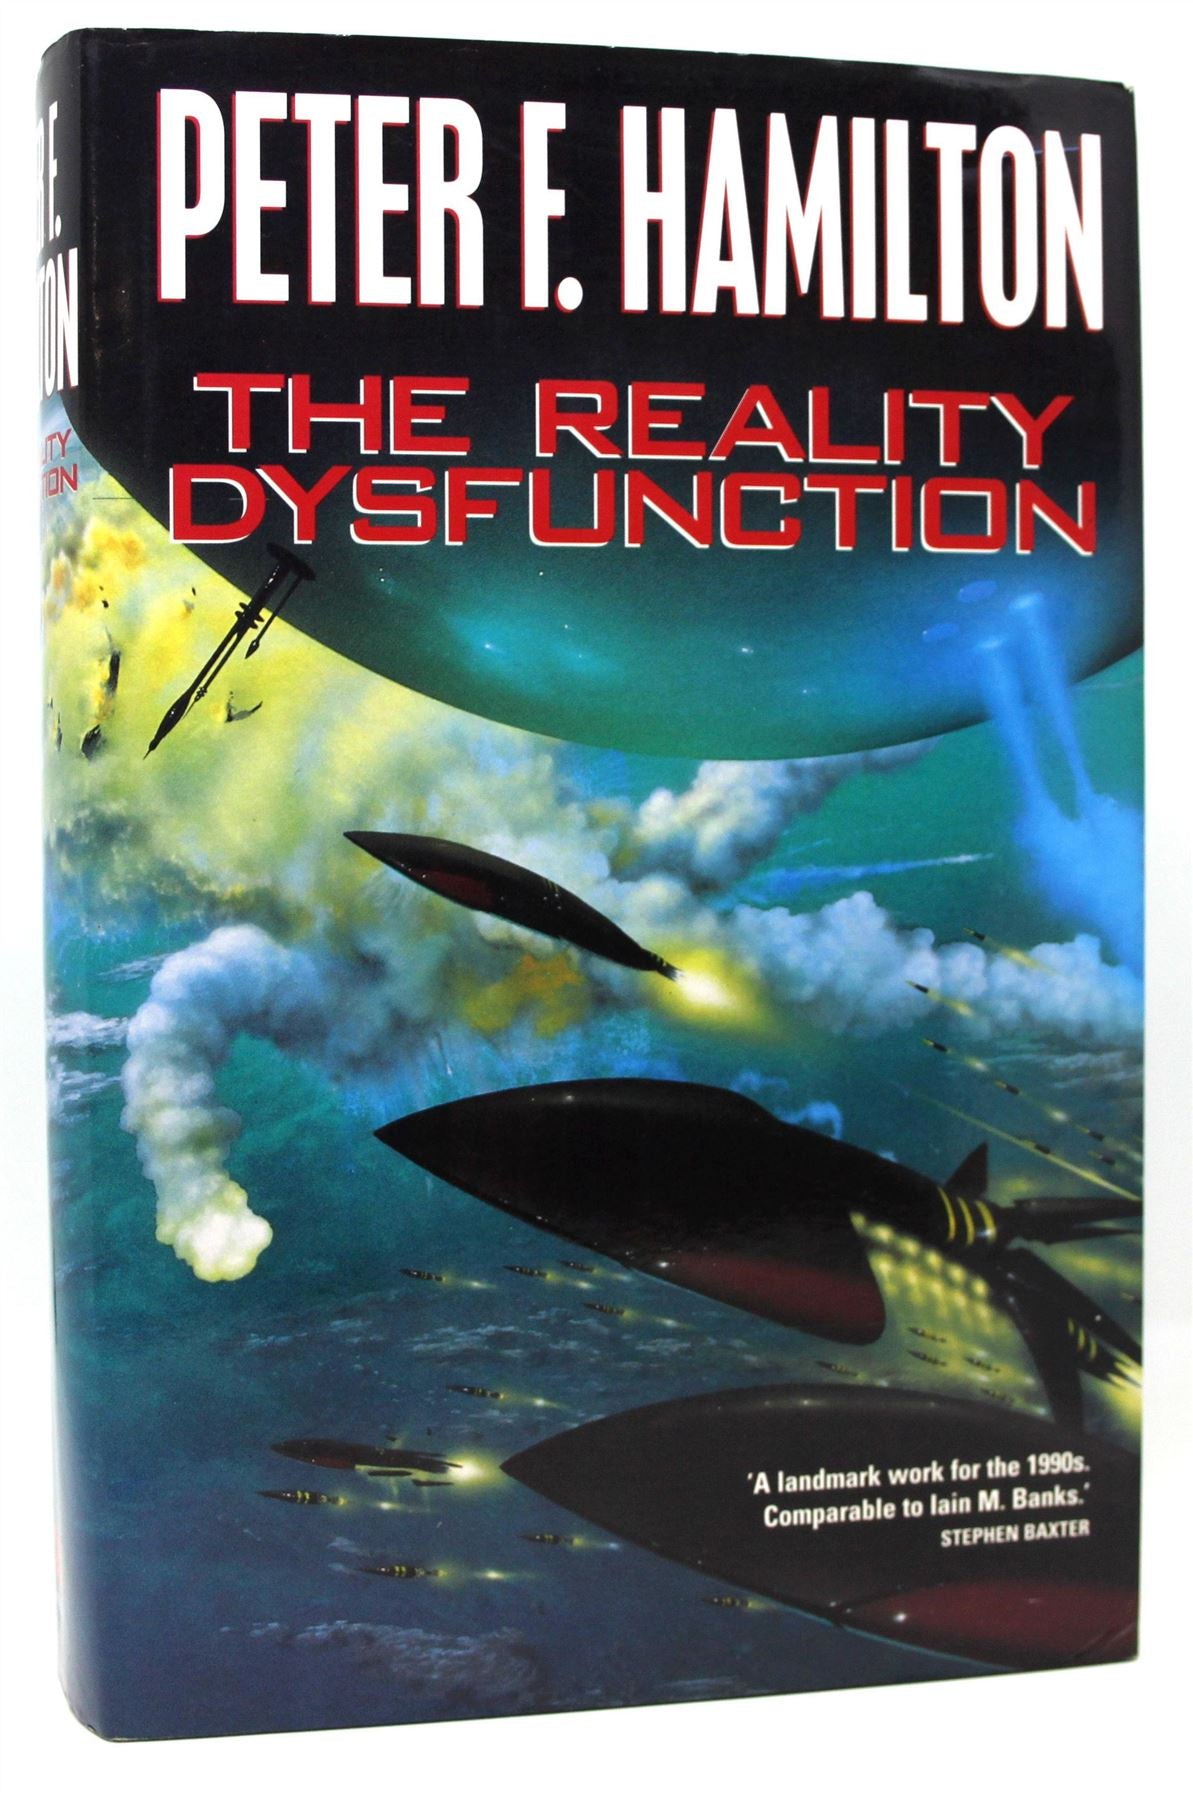 THE REALITY DYSFUNCTION, Peter F. Hamilton